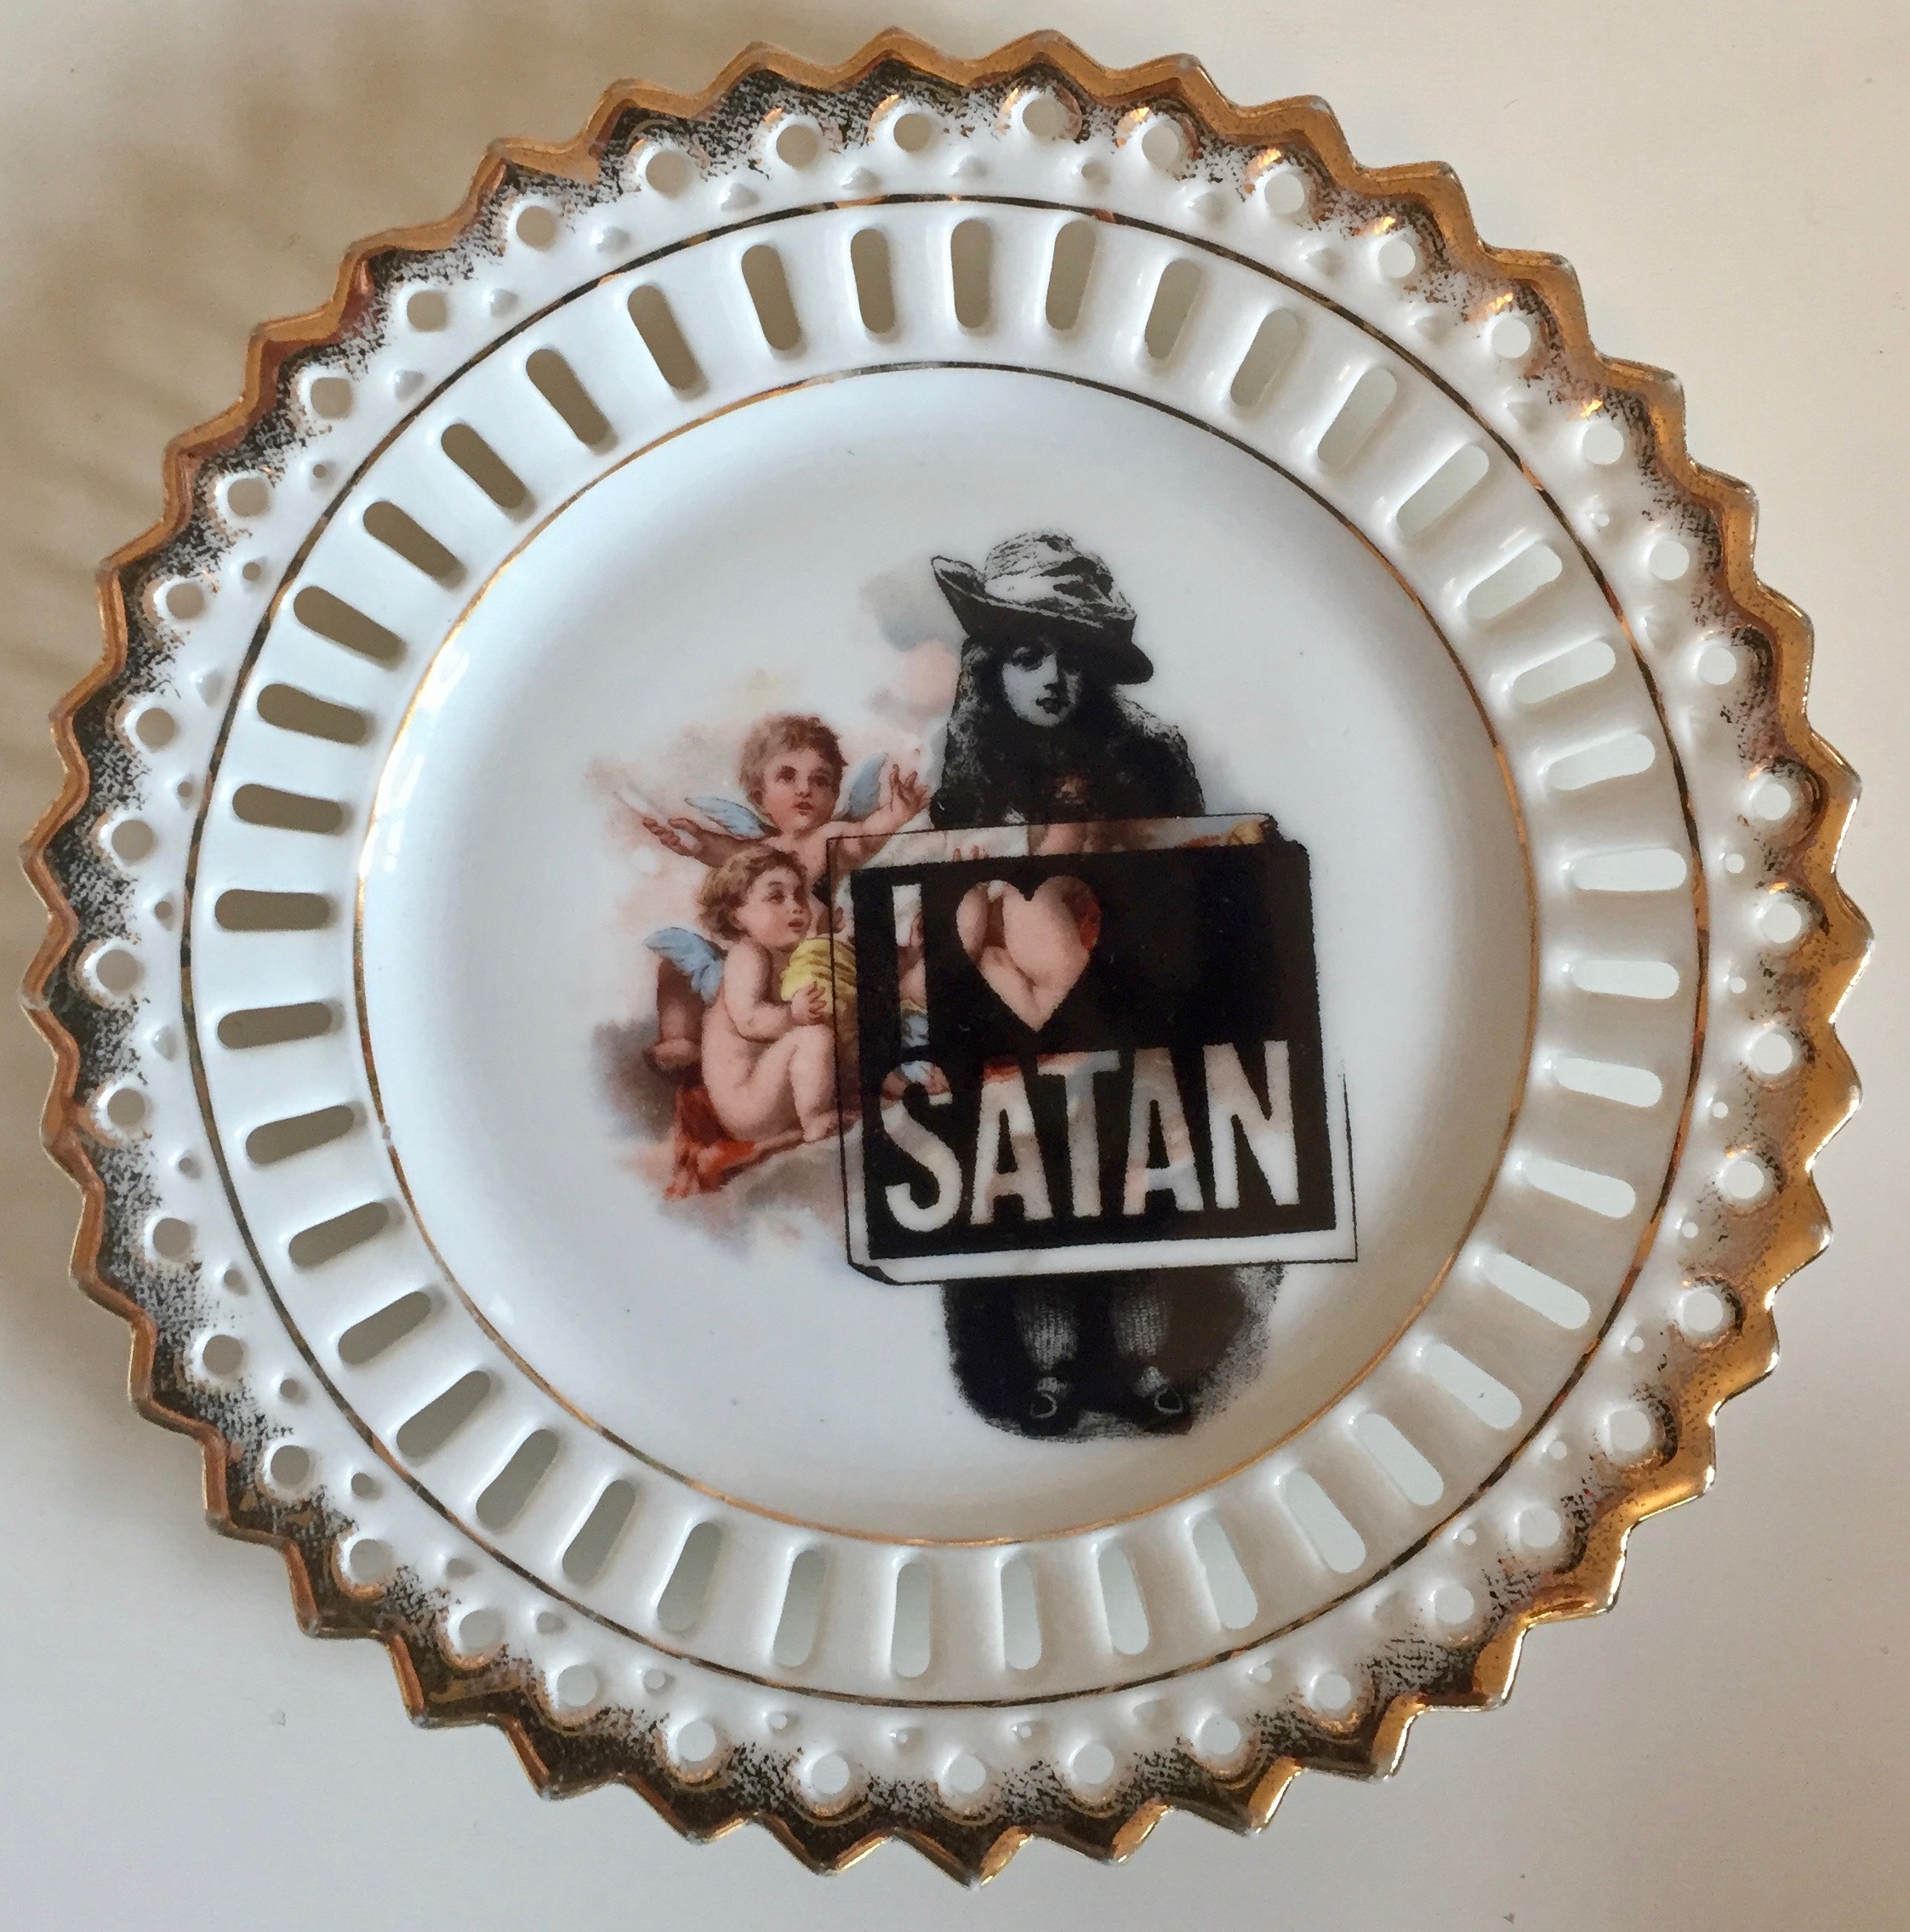 carrie reichardt i love satan vintage ceramic plate